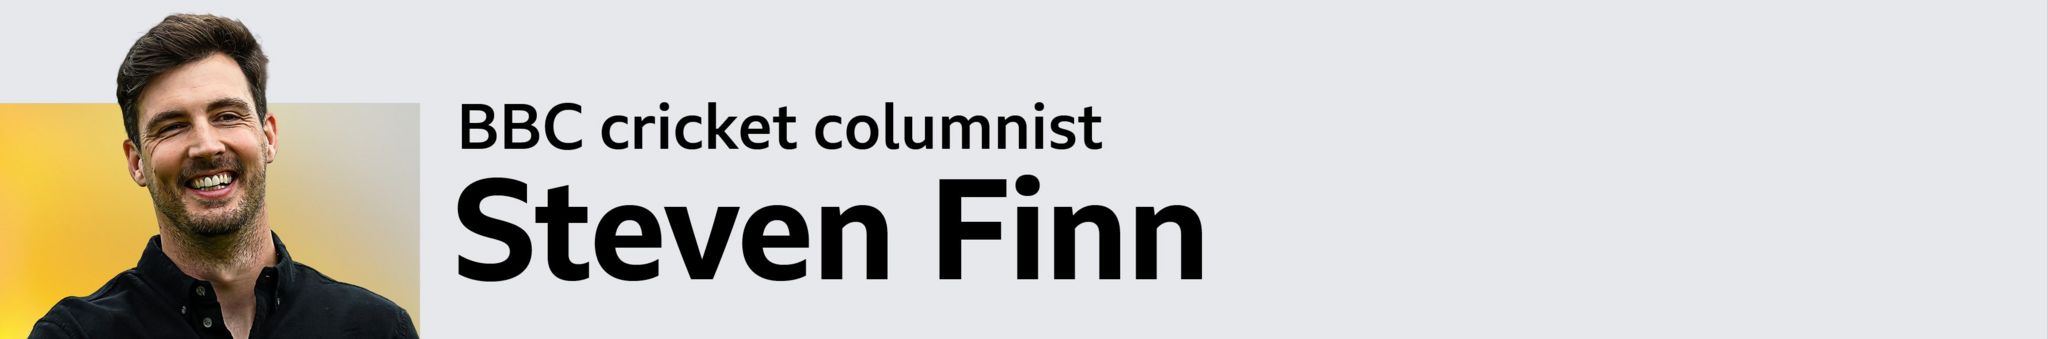 Steven Finn column header